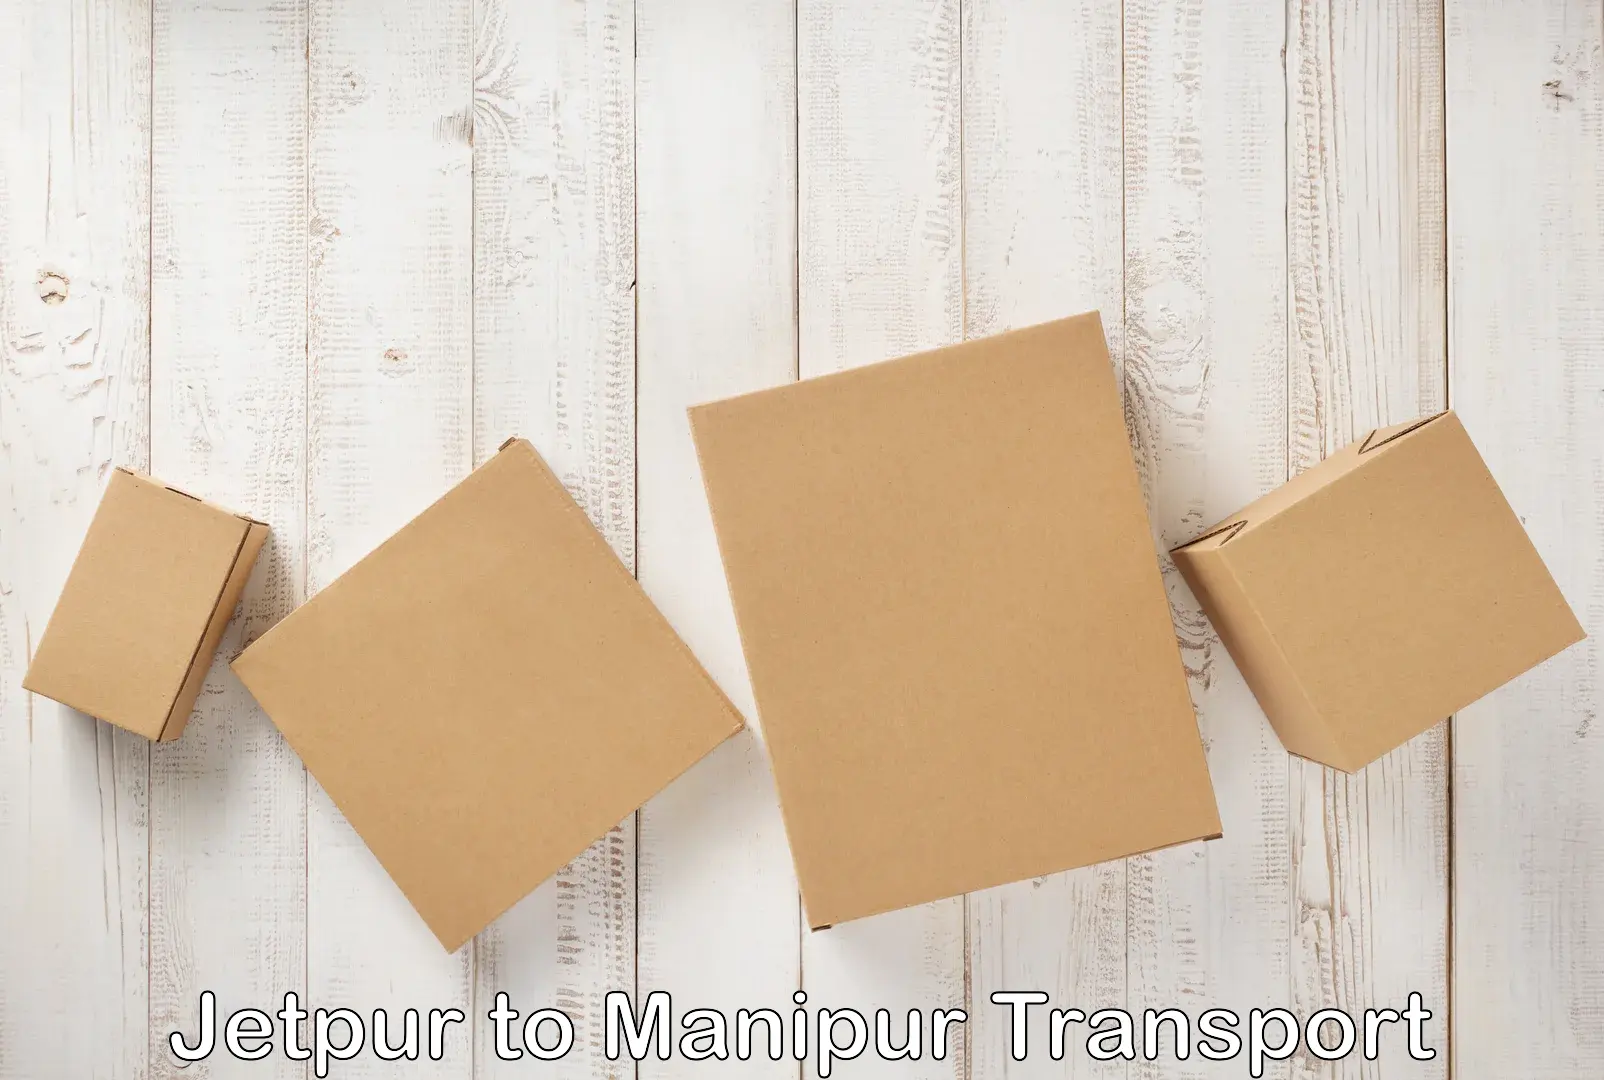 Online transport service Jetpur to Manipur